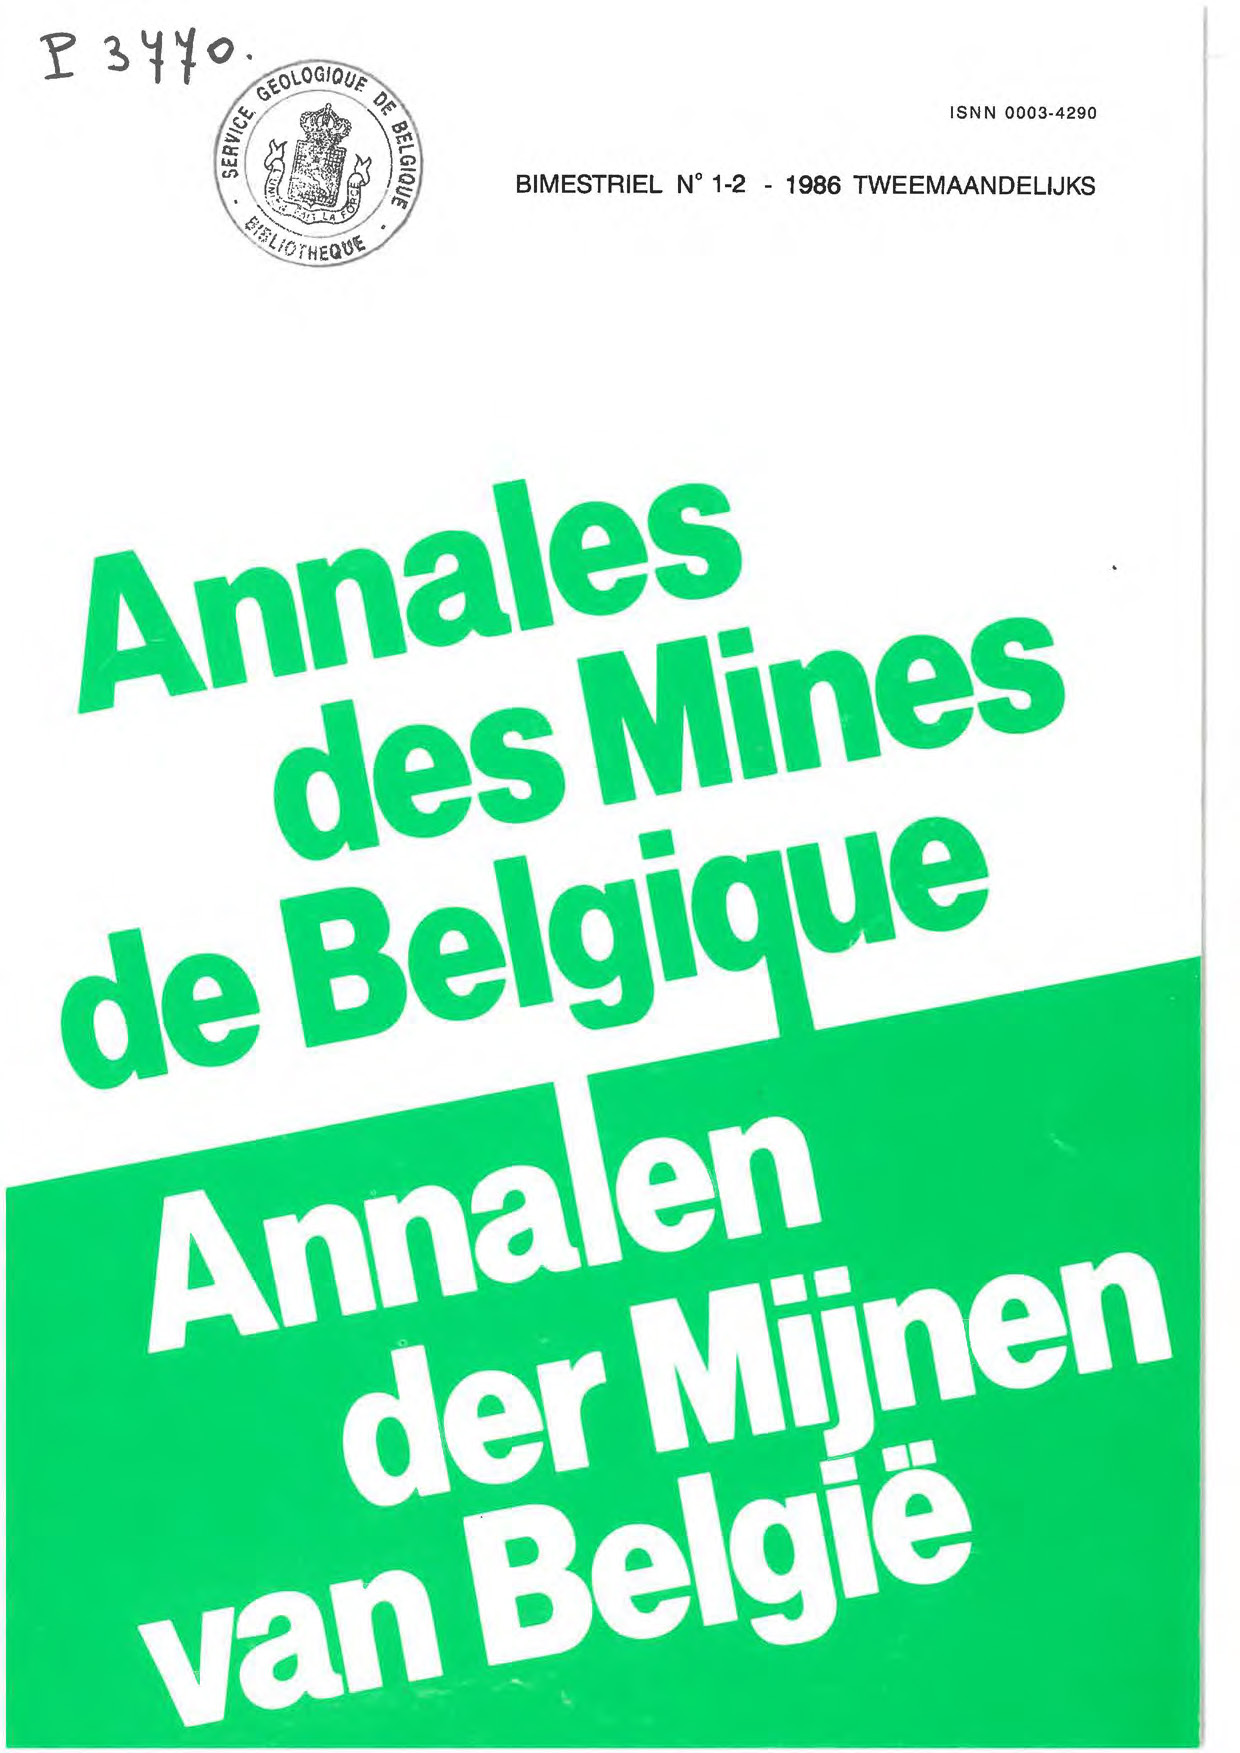 Pagina's van 1986_1-2-annales-des-mines-de-belgique.jpg